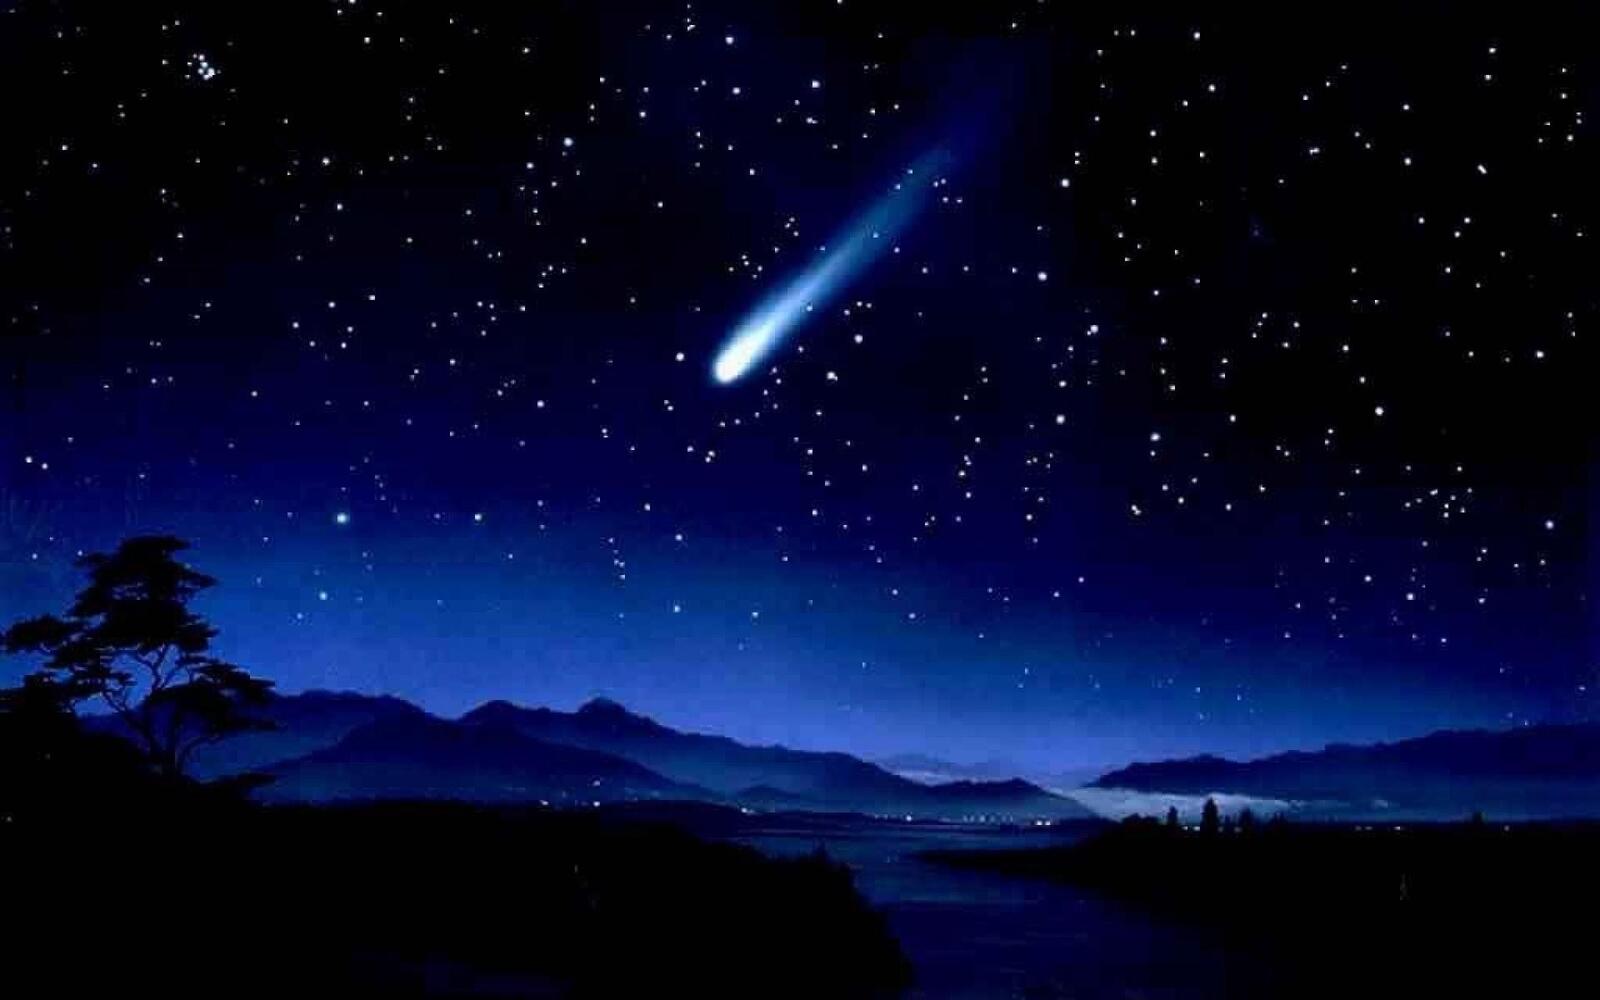 Бесплатное фото Падающая звезда на ночном небе